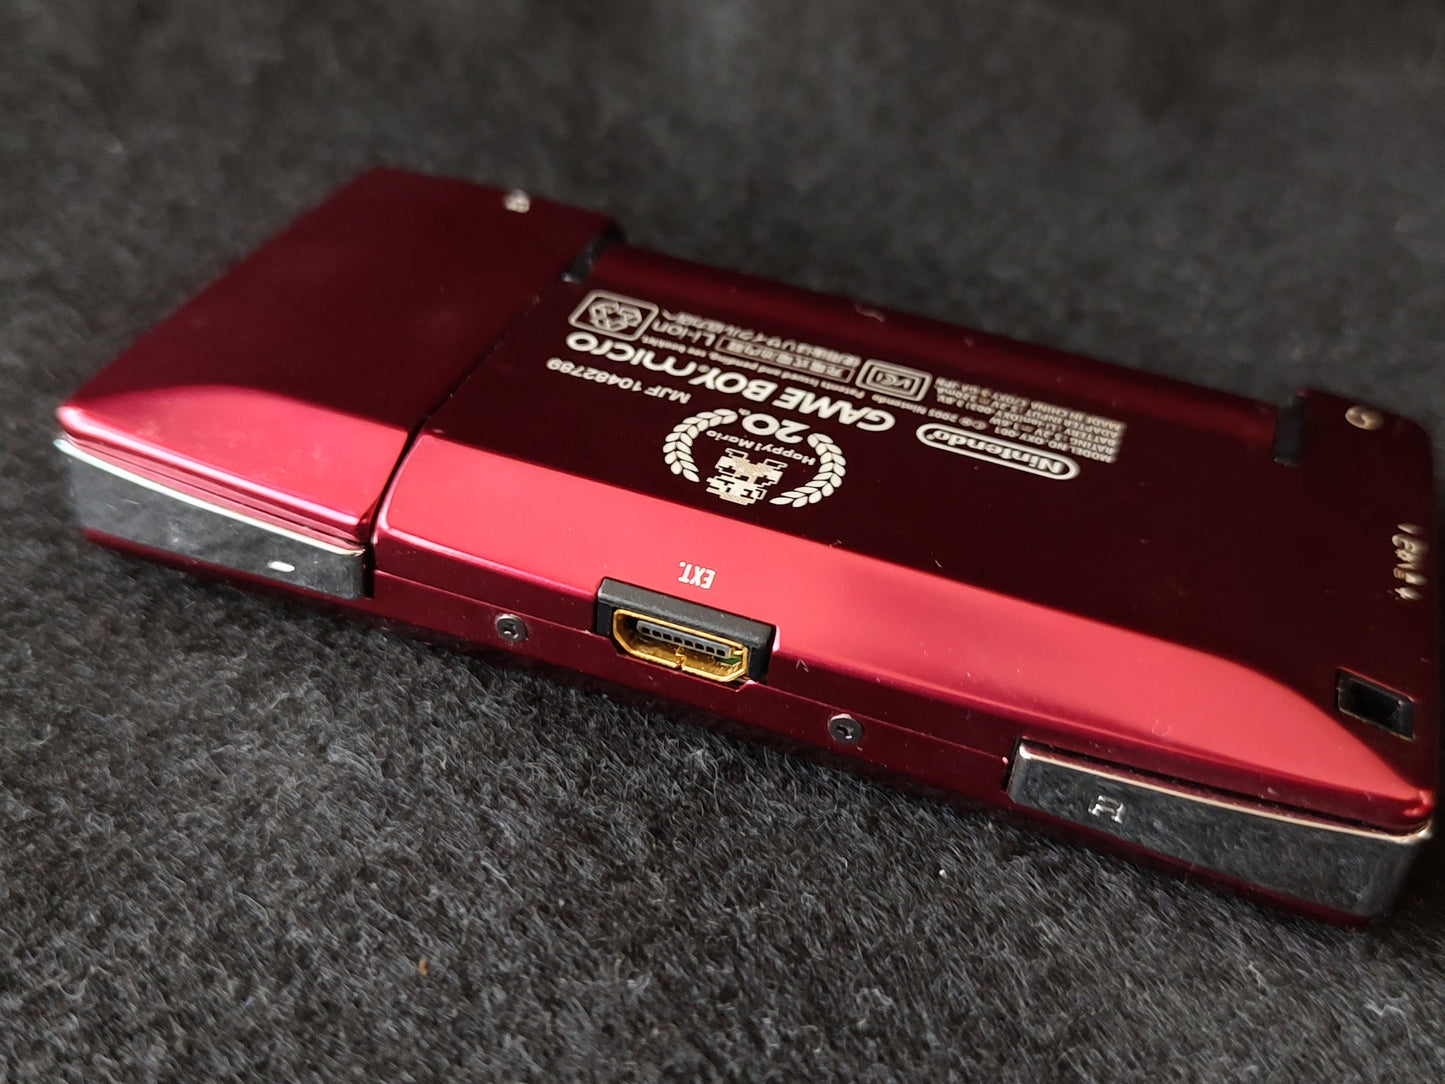 Nintendo Gameboy Micro Famicom 20th Anniversary Edition console OXY-001 -f1008-